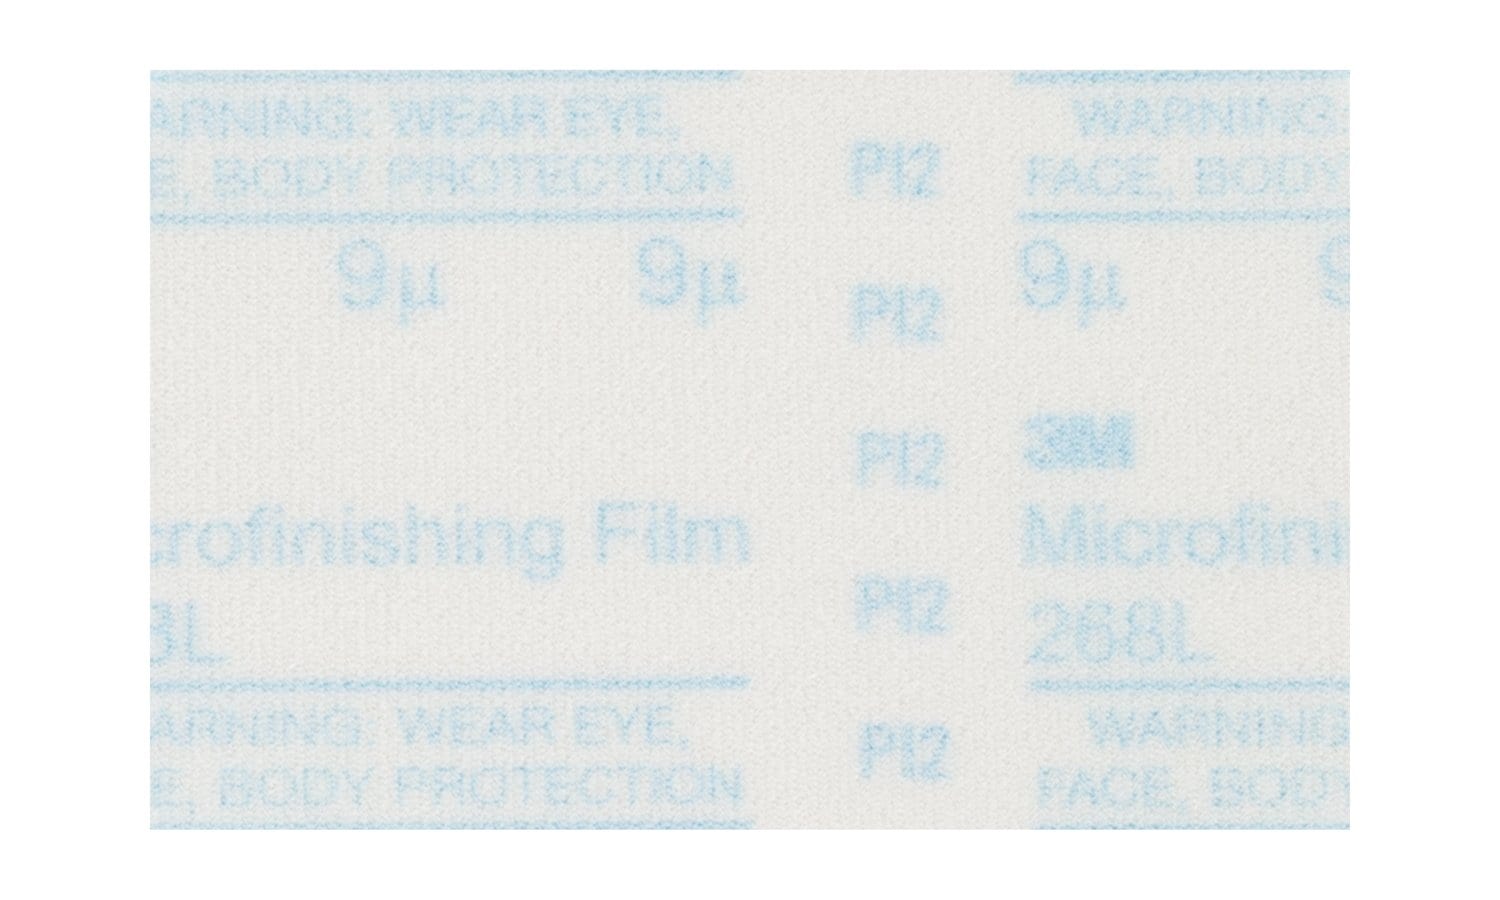 7100047231 - 3M Microfinishing Film Sheet 268L, 30 Mic, Type D, Unbacksized, Config